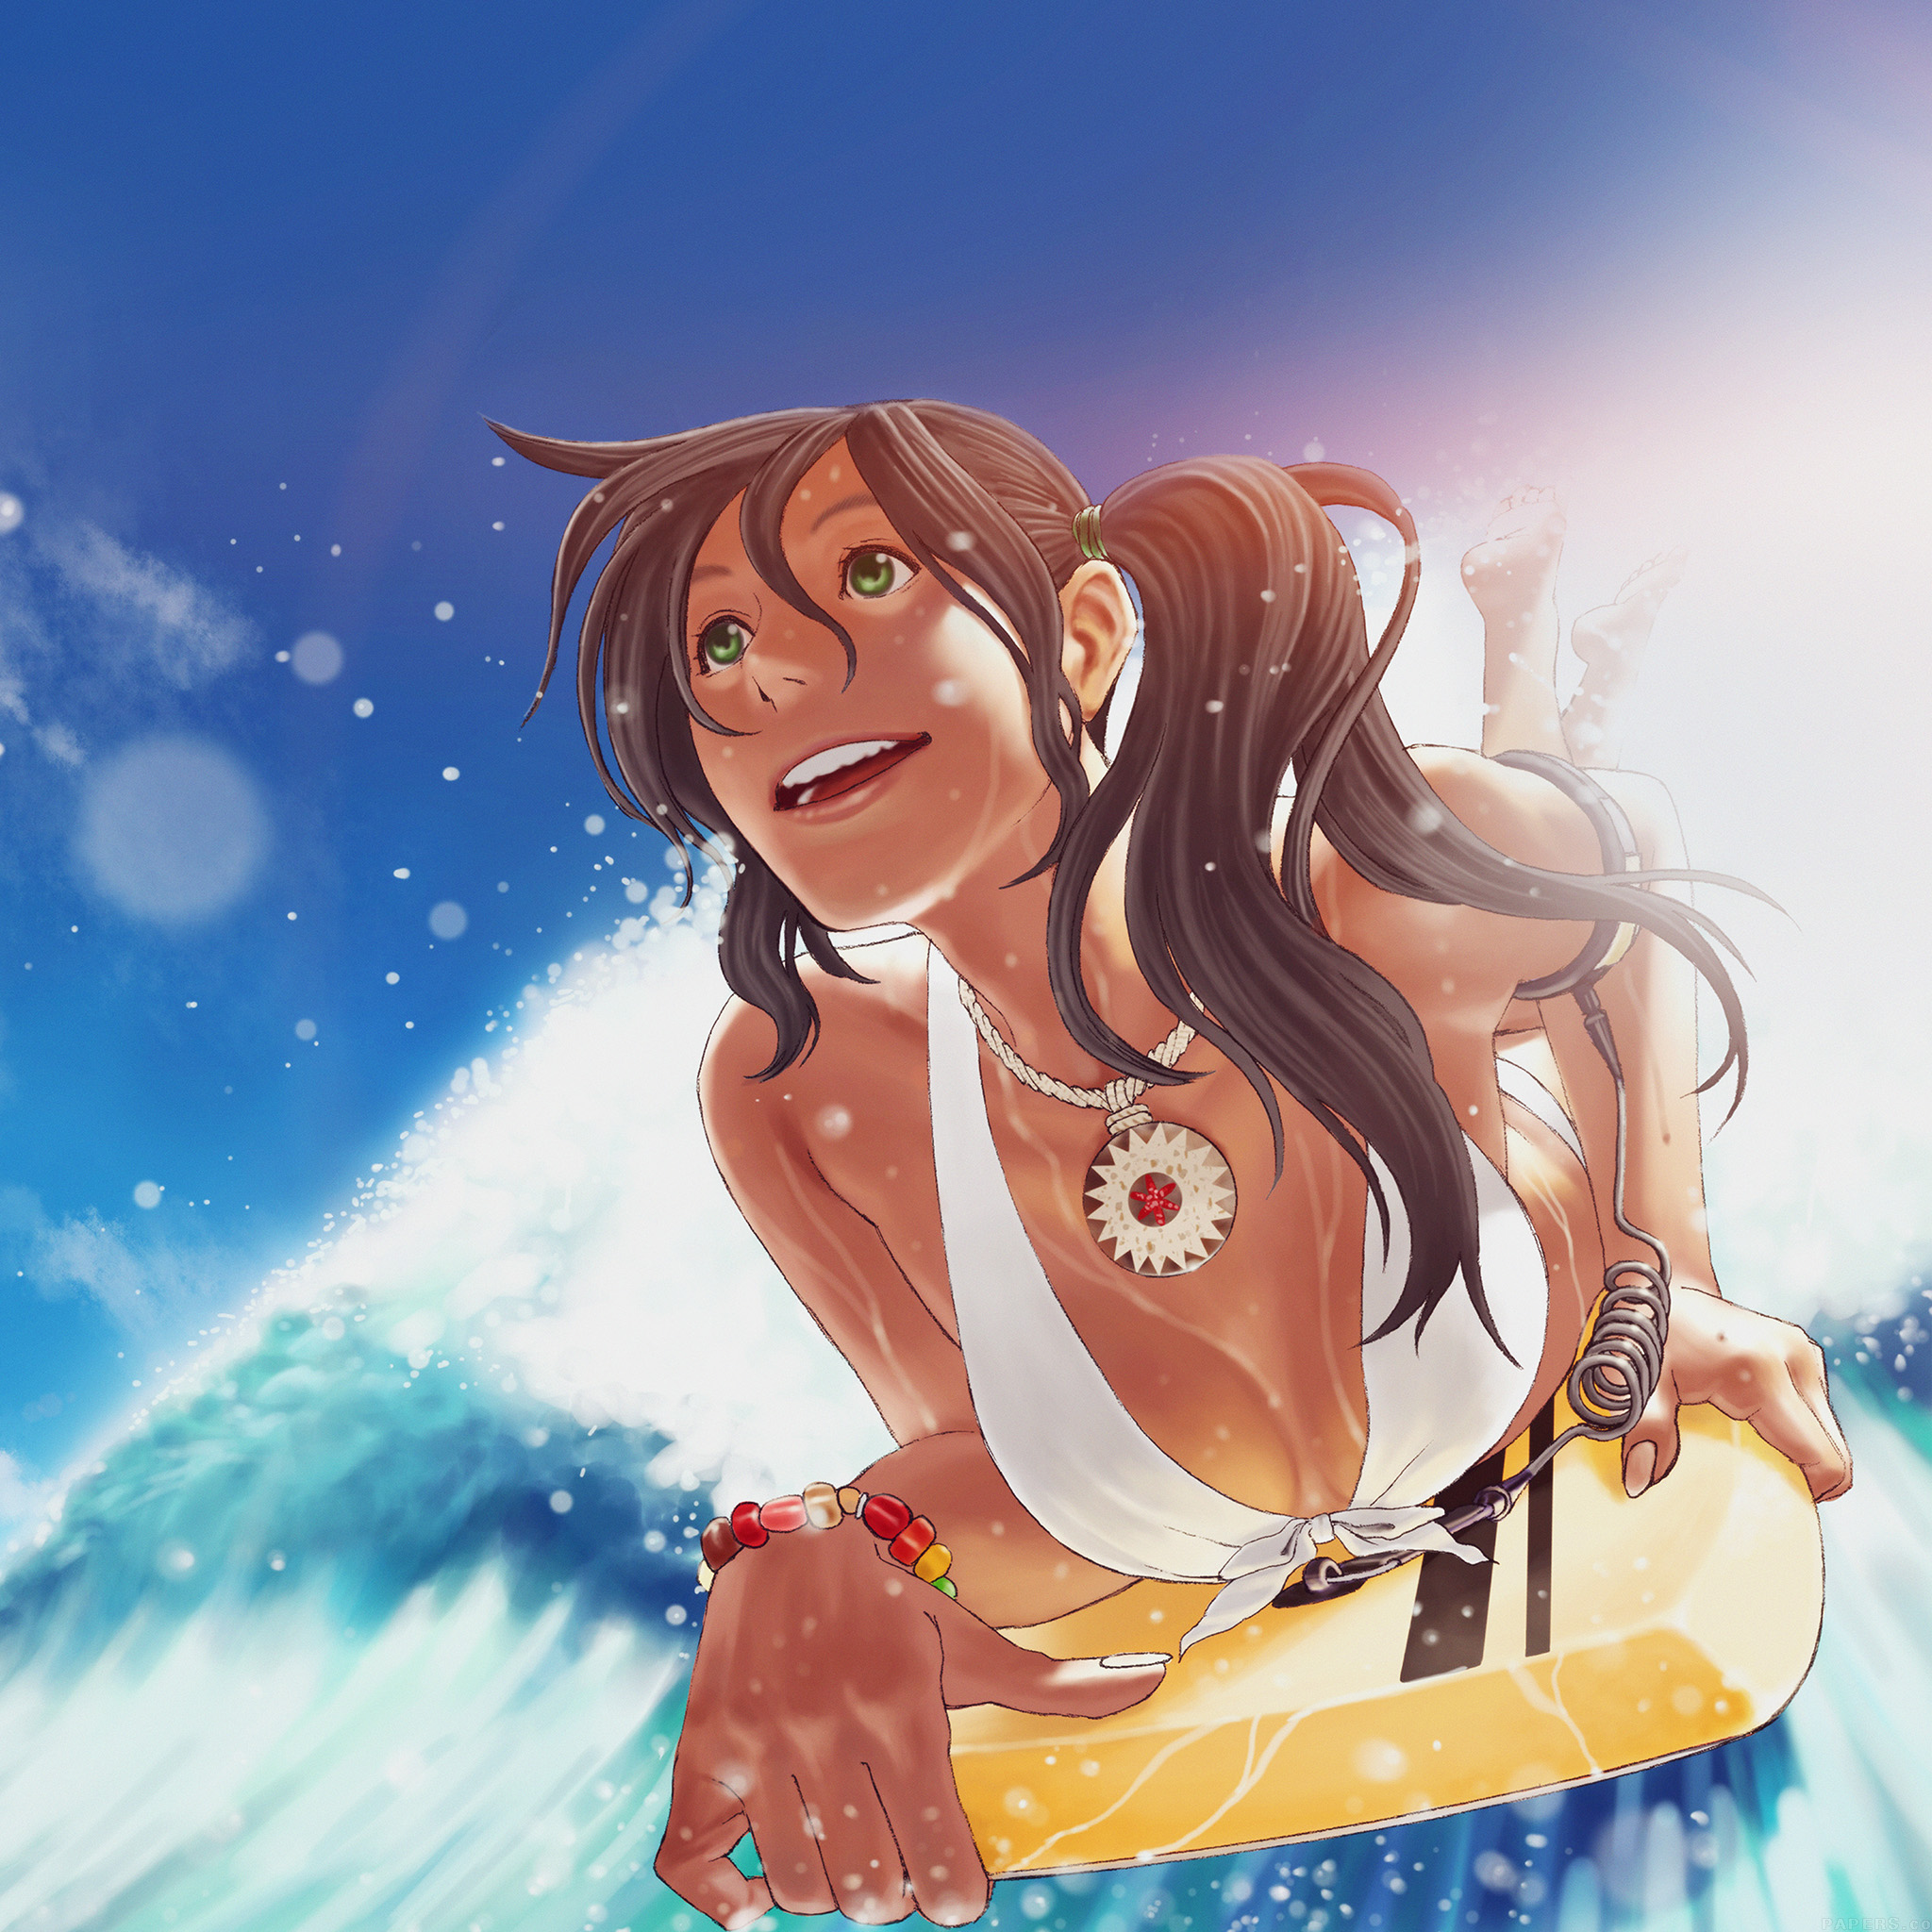 Android wallpaper. surfing girl anime illust art sea sports